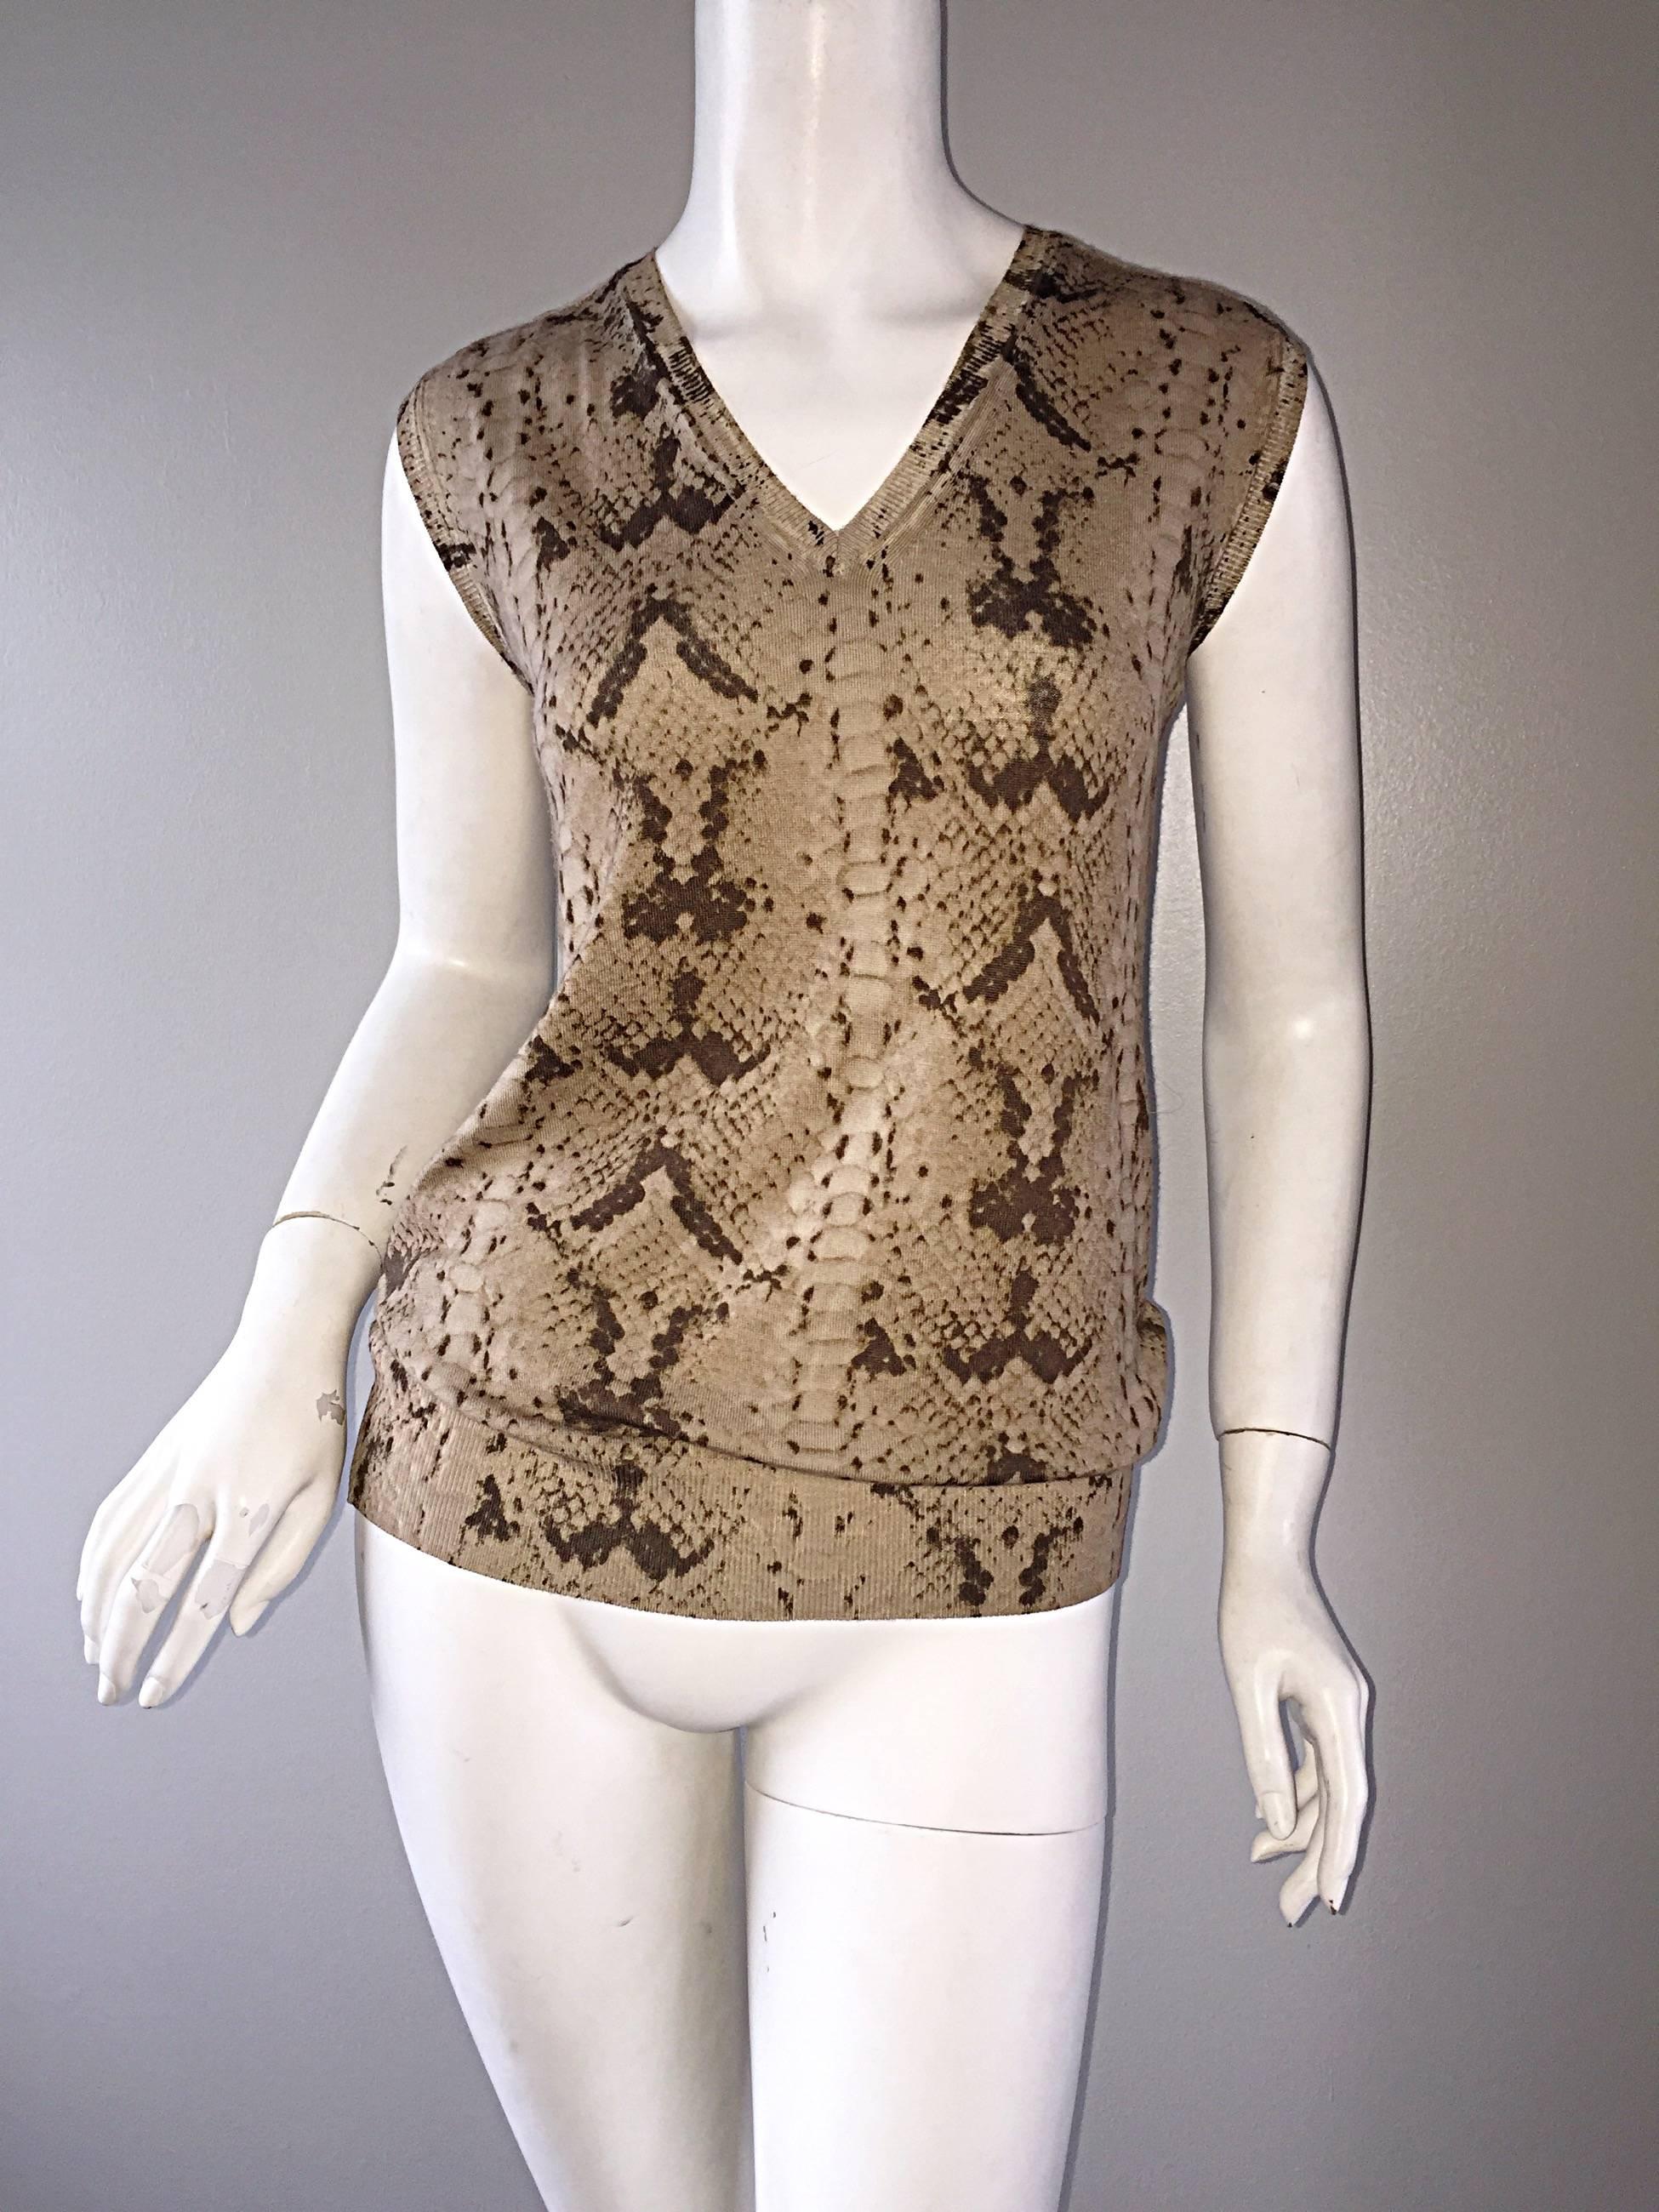 Tom Ford For Yves Saint Laurent Reptile Snake Print Lightweight Wool Top / Vest For Sale 1